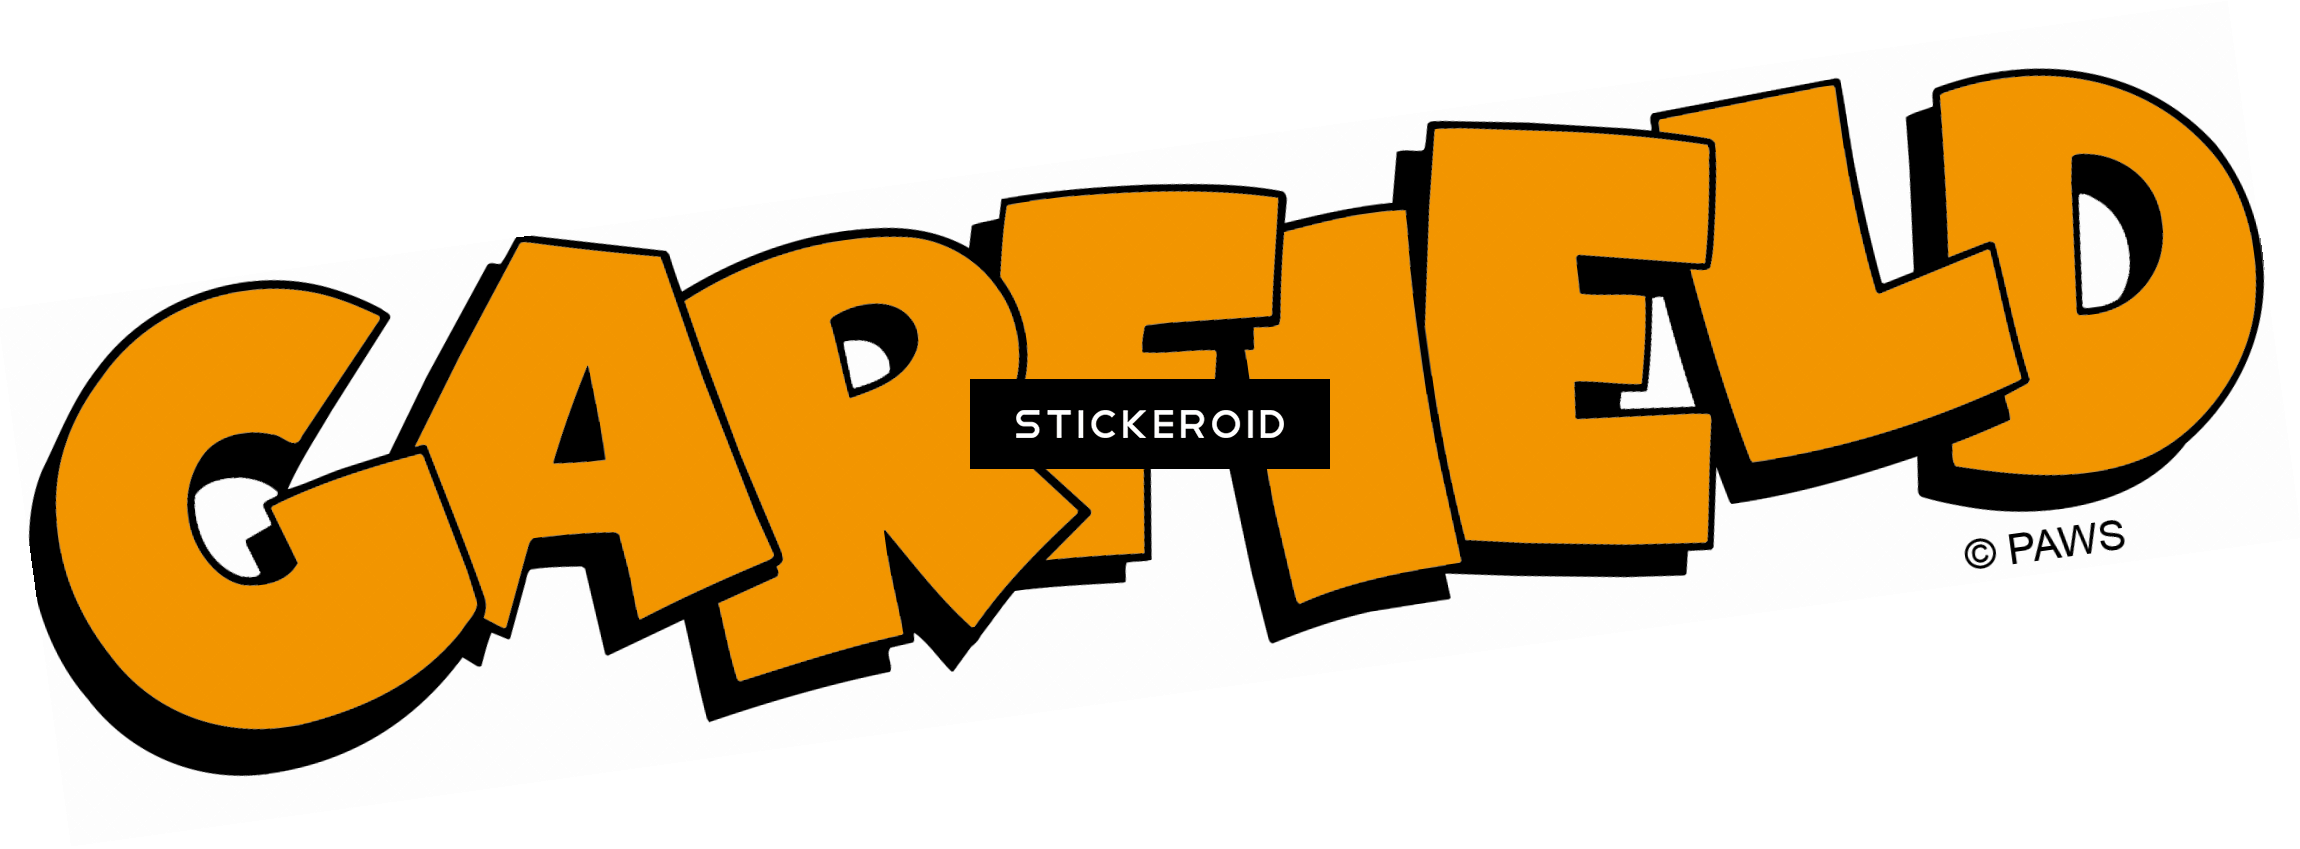 Garfield Logo - Garfield Load20180523 Logo Stickpng003.PNG